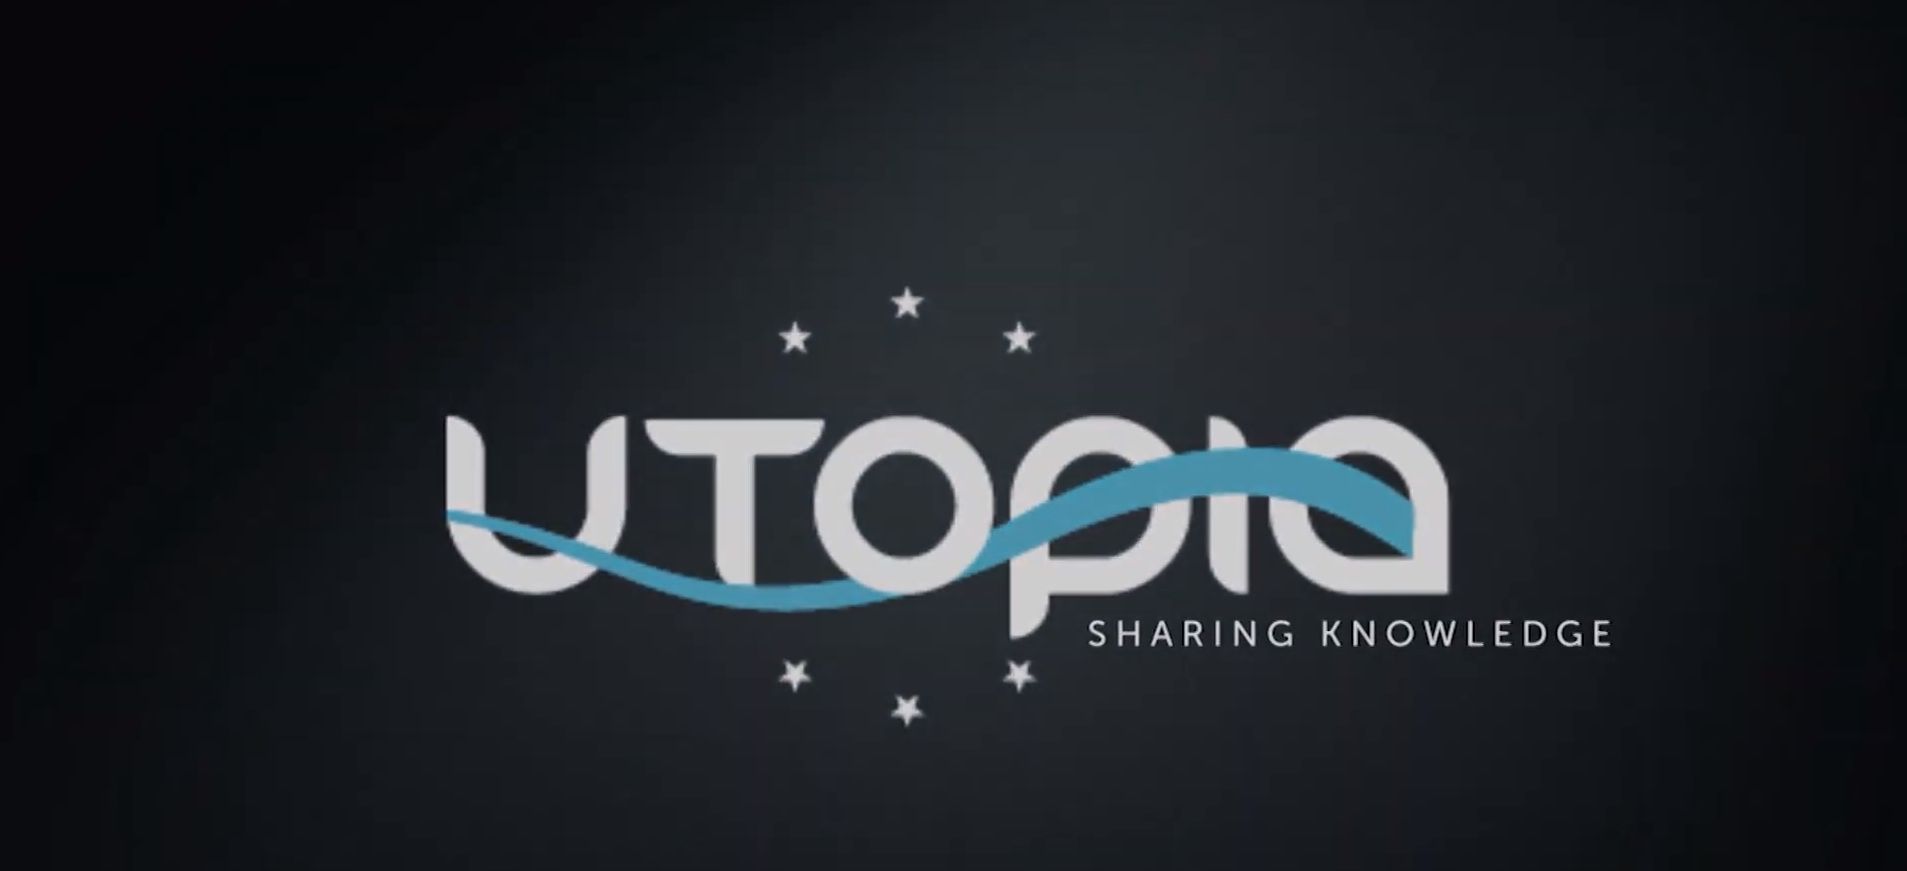 Utopia – Sharing knowledge